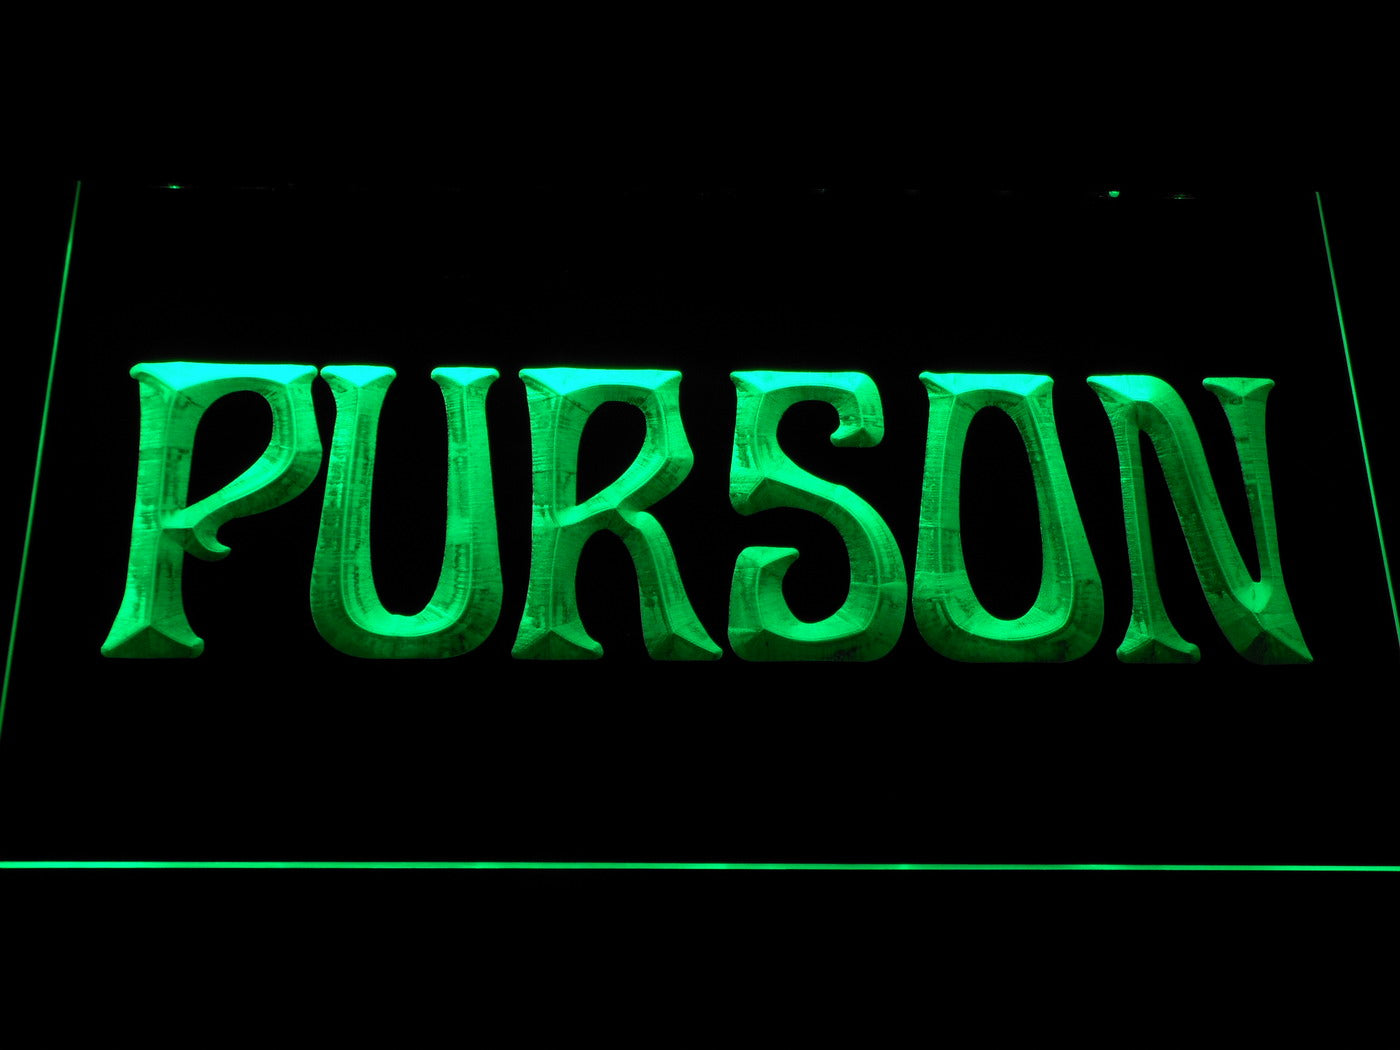 Purson Rock Band LED Neon Sign